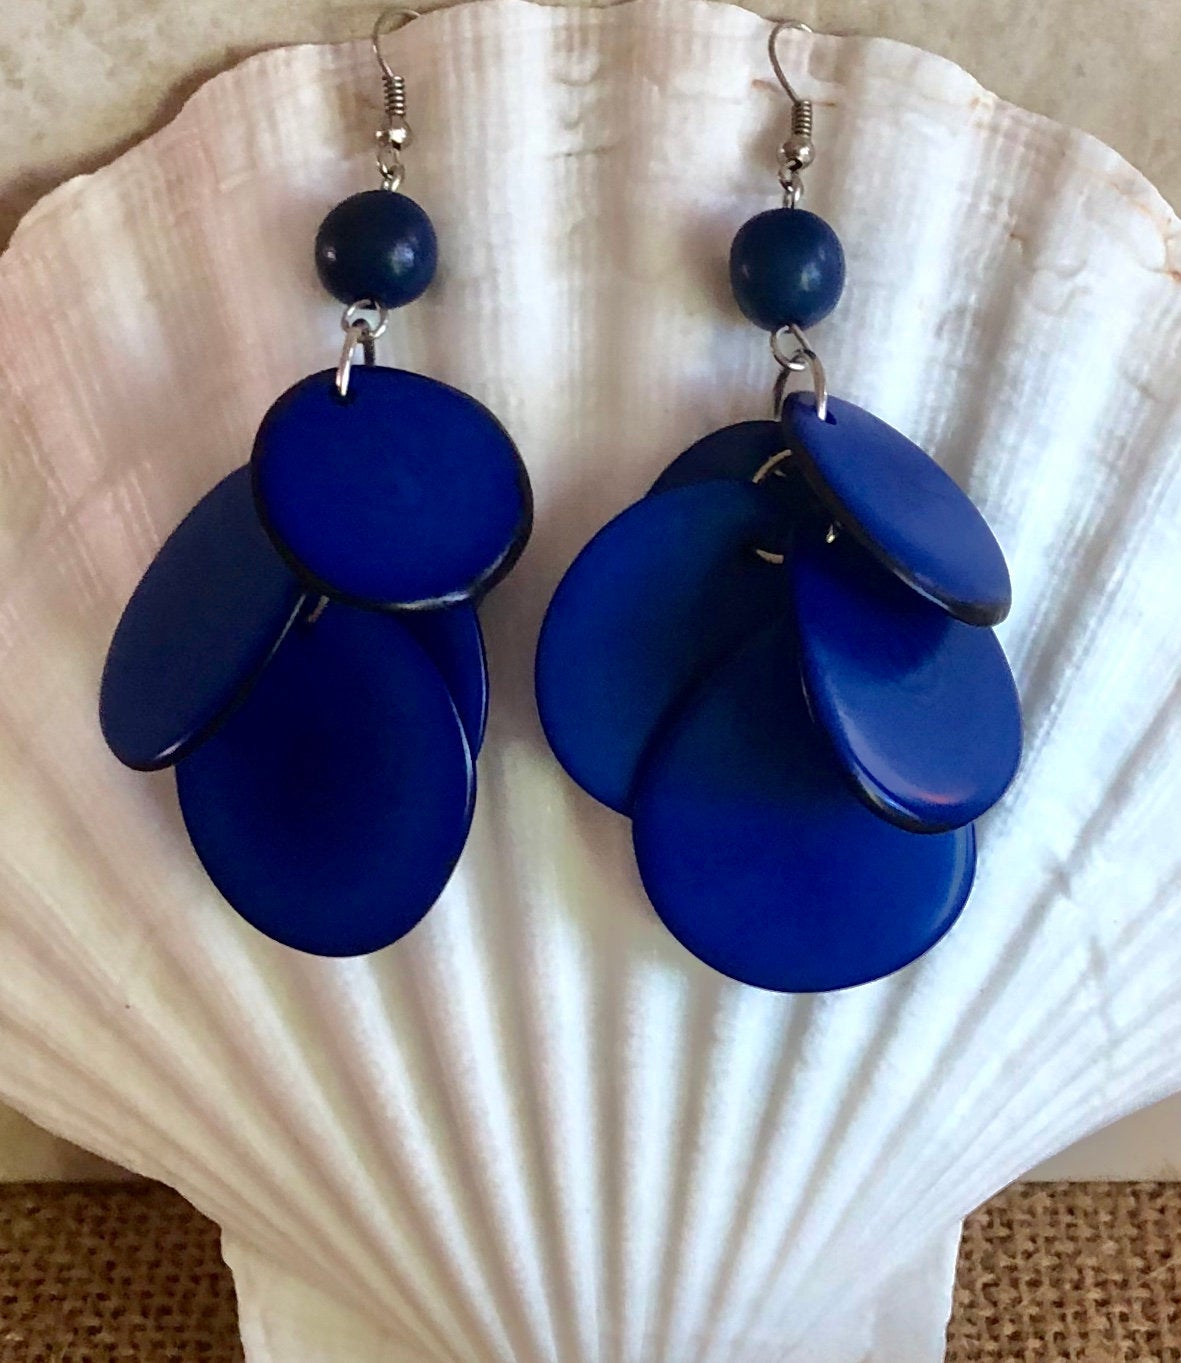 Blue Tagua Nut Earrings, Statement Earrings, Christmas Gift Earrings, Dangly Earrings, Handmade Gift, Holiday Gift, Eco Gift, Women Gift,